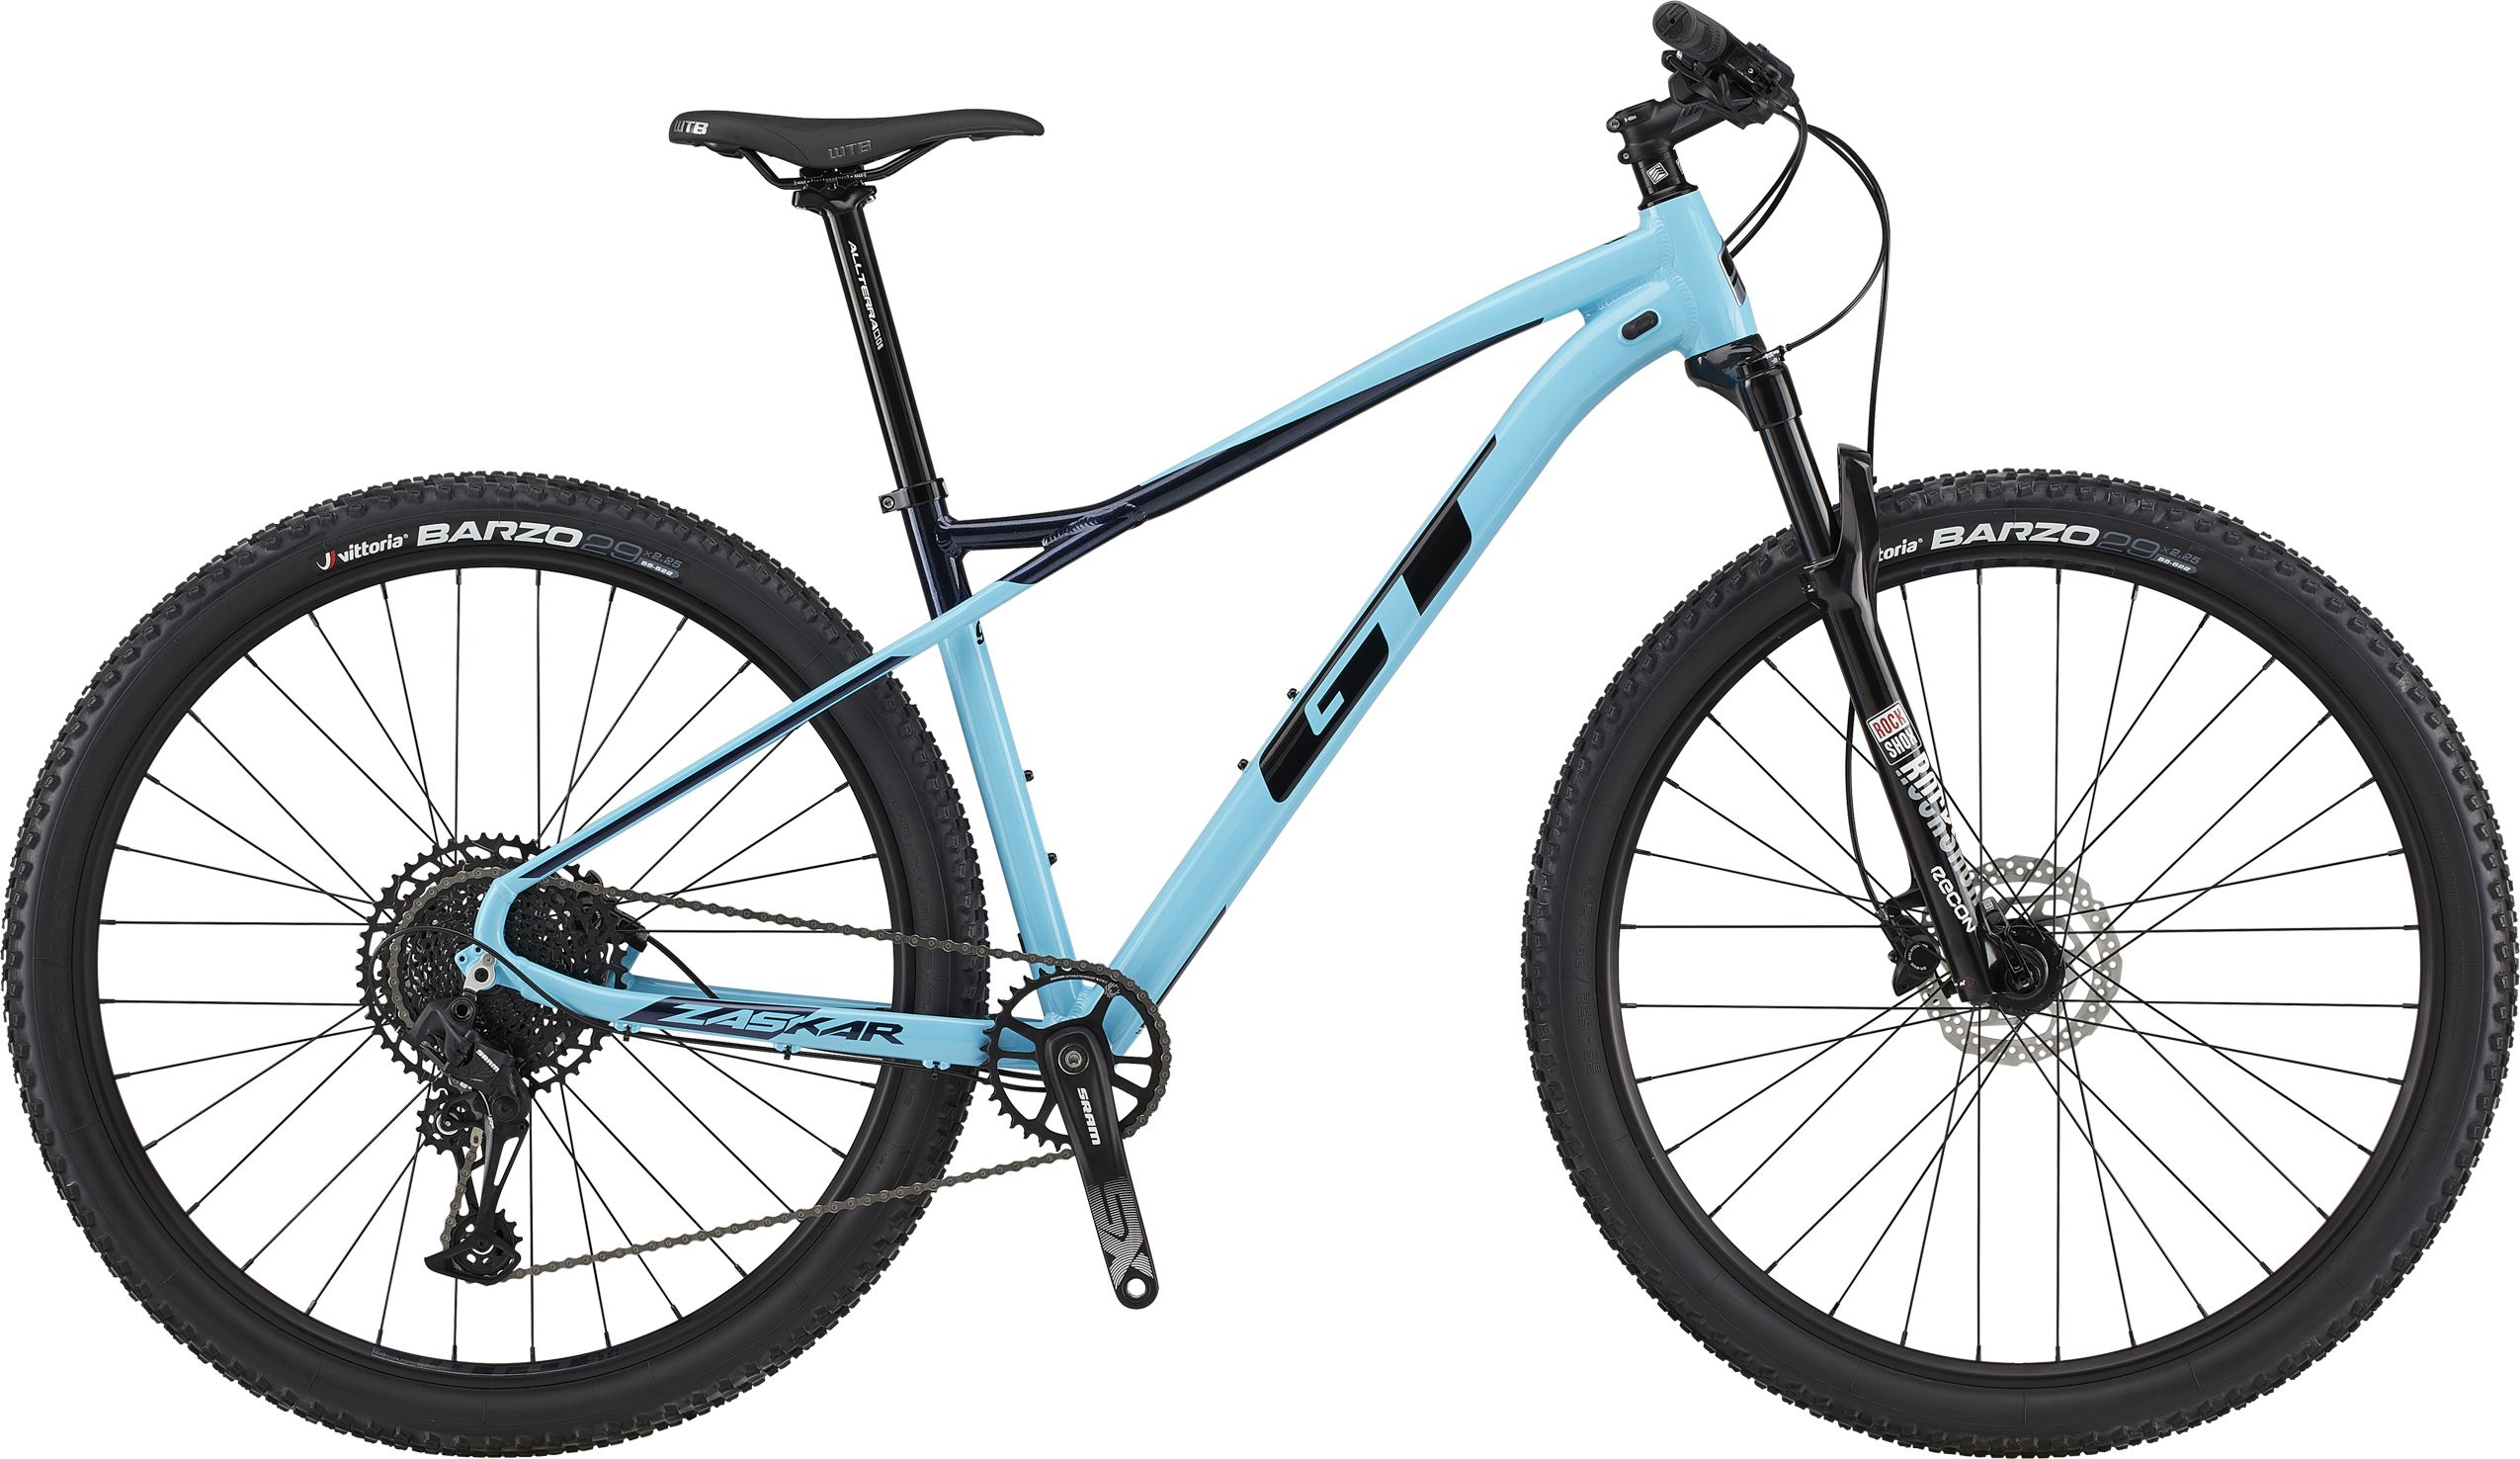 Gt Zaskar Alloy Comp 29er Mountain Bike 2020 £109399 Gt Hardtail